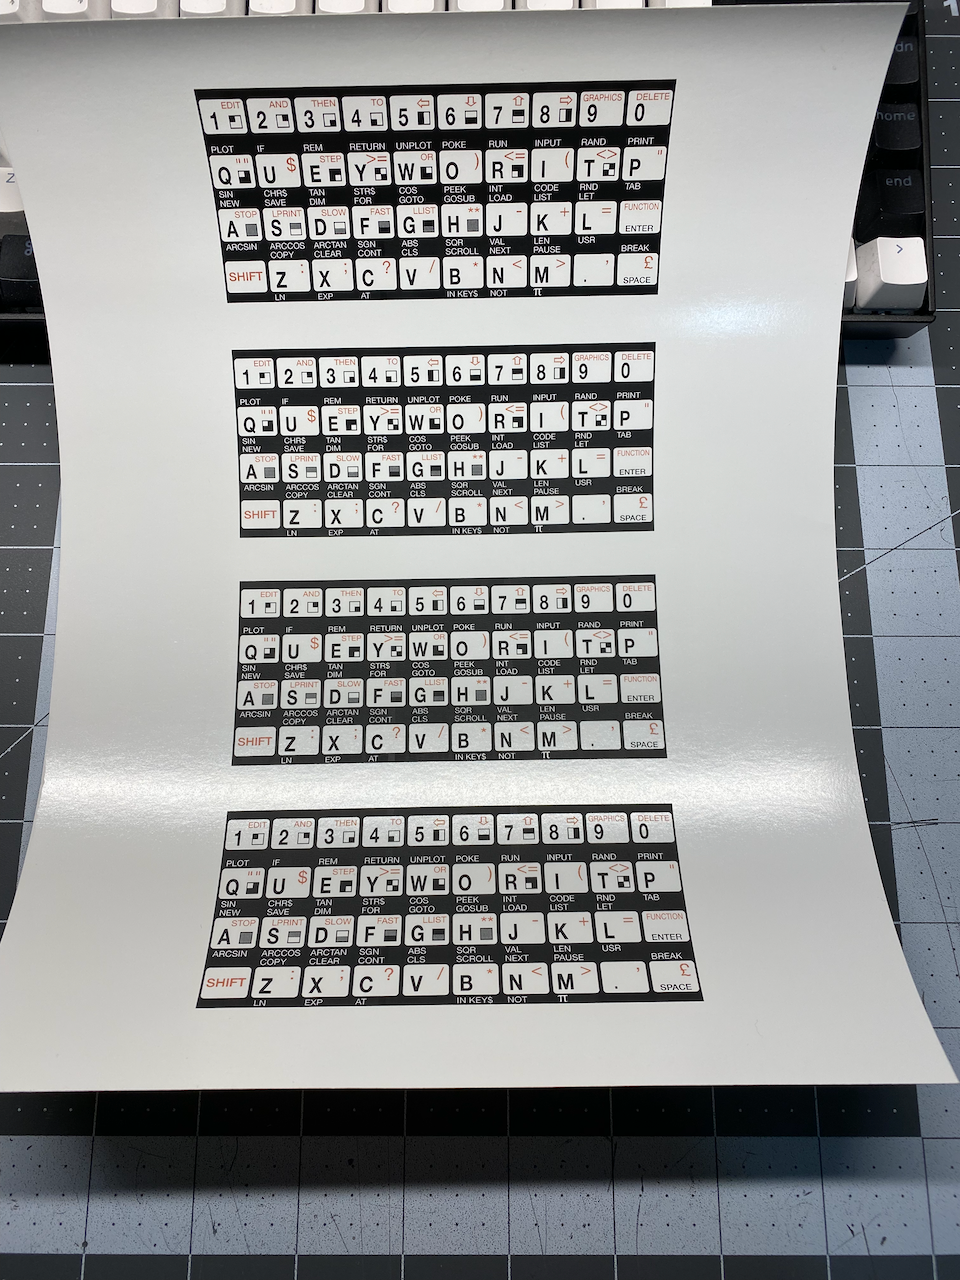 ZX81/TIMEX-SINCLAIR 1000 Custom Mechanical Keyboard Prototype - Part 2